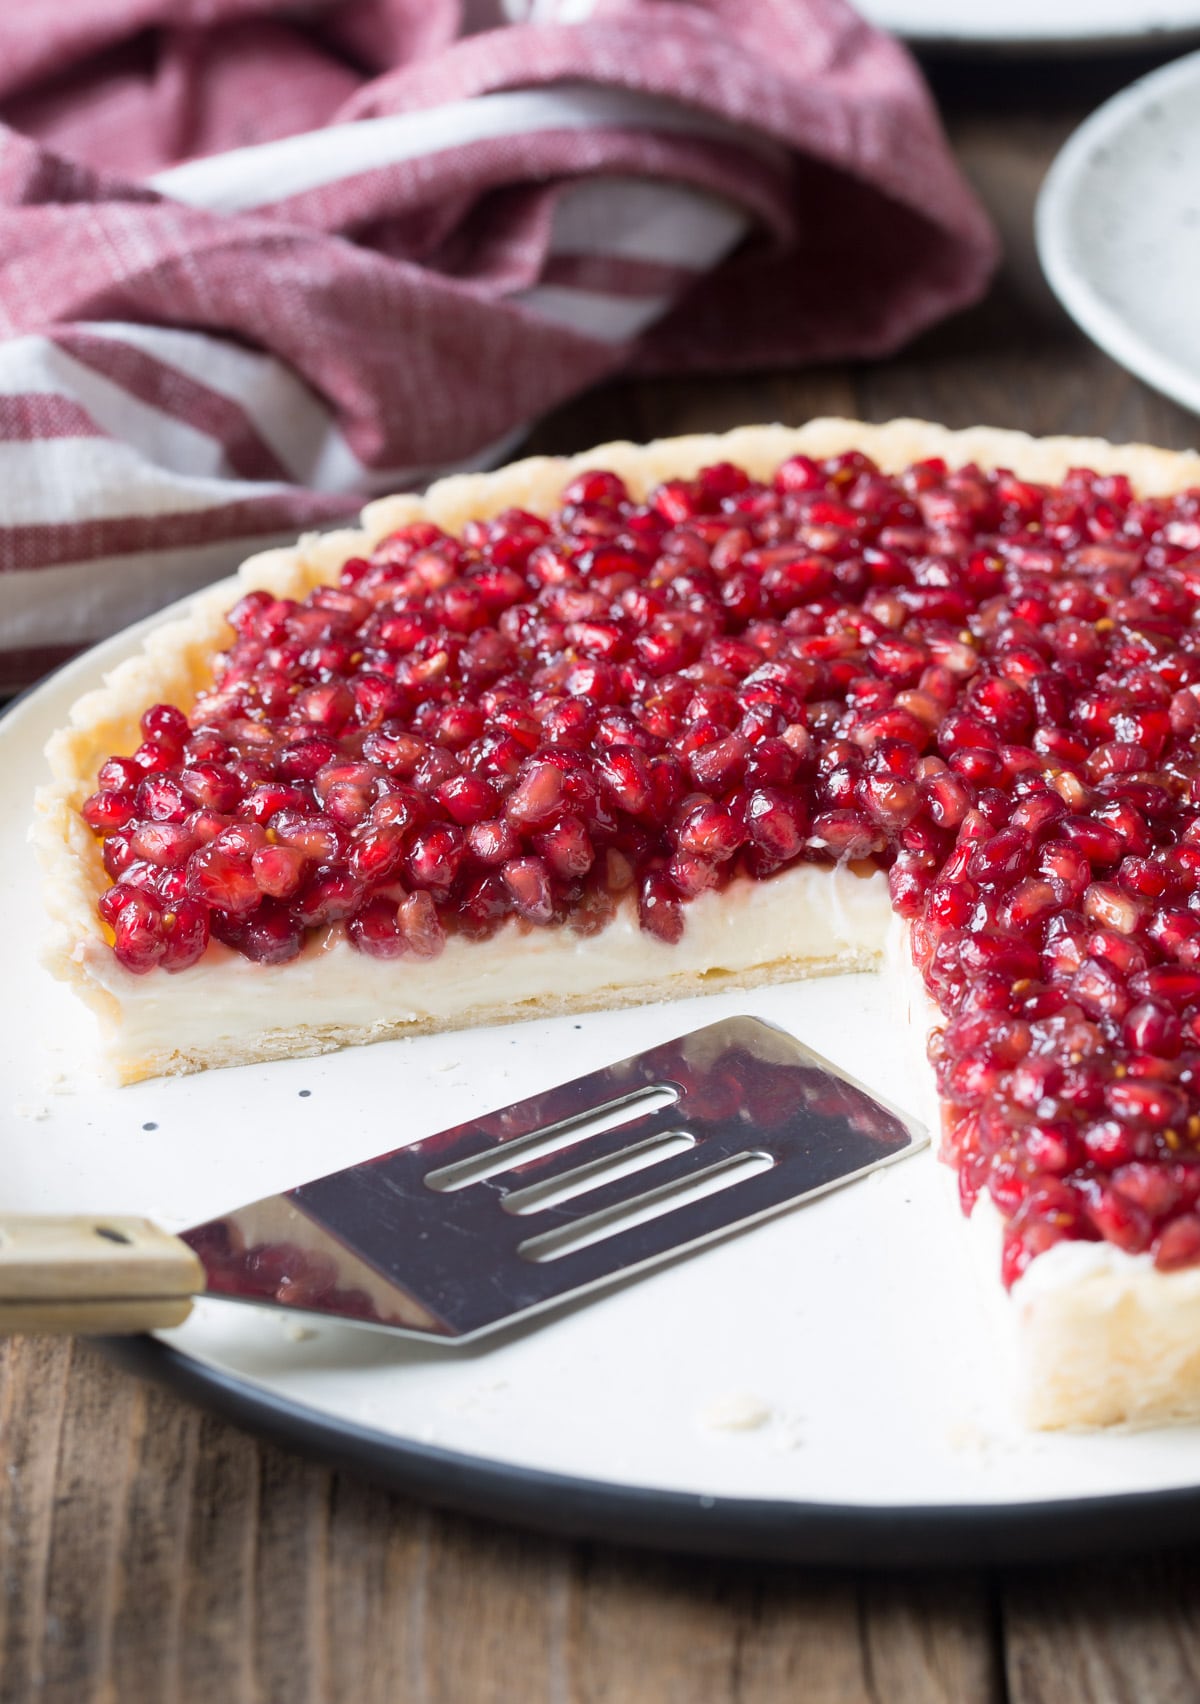 6-Ingredient Pomegranate Cream Tart Recipe #ASpicyPerspective #holiday #pomegranaterecipe